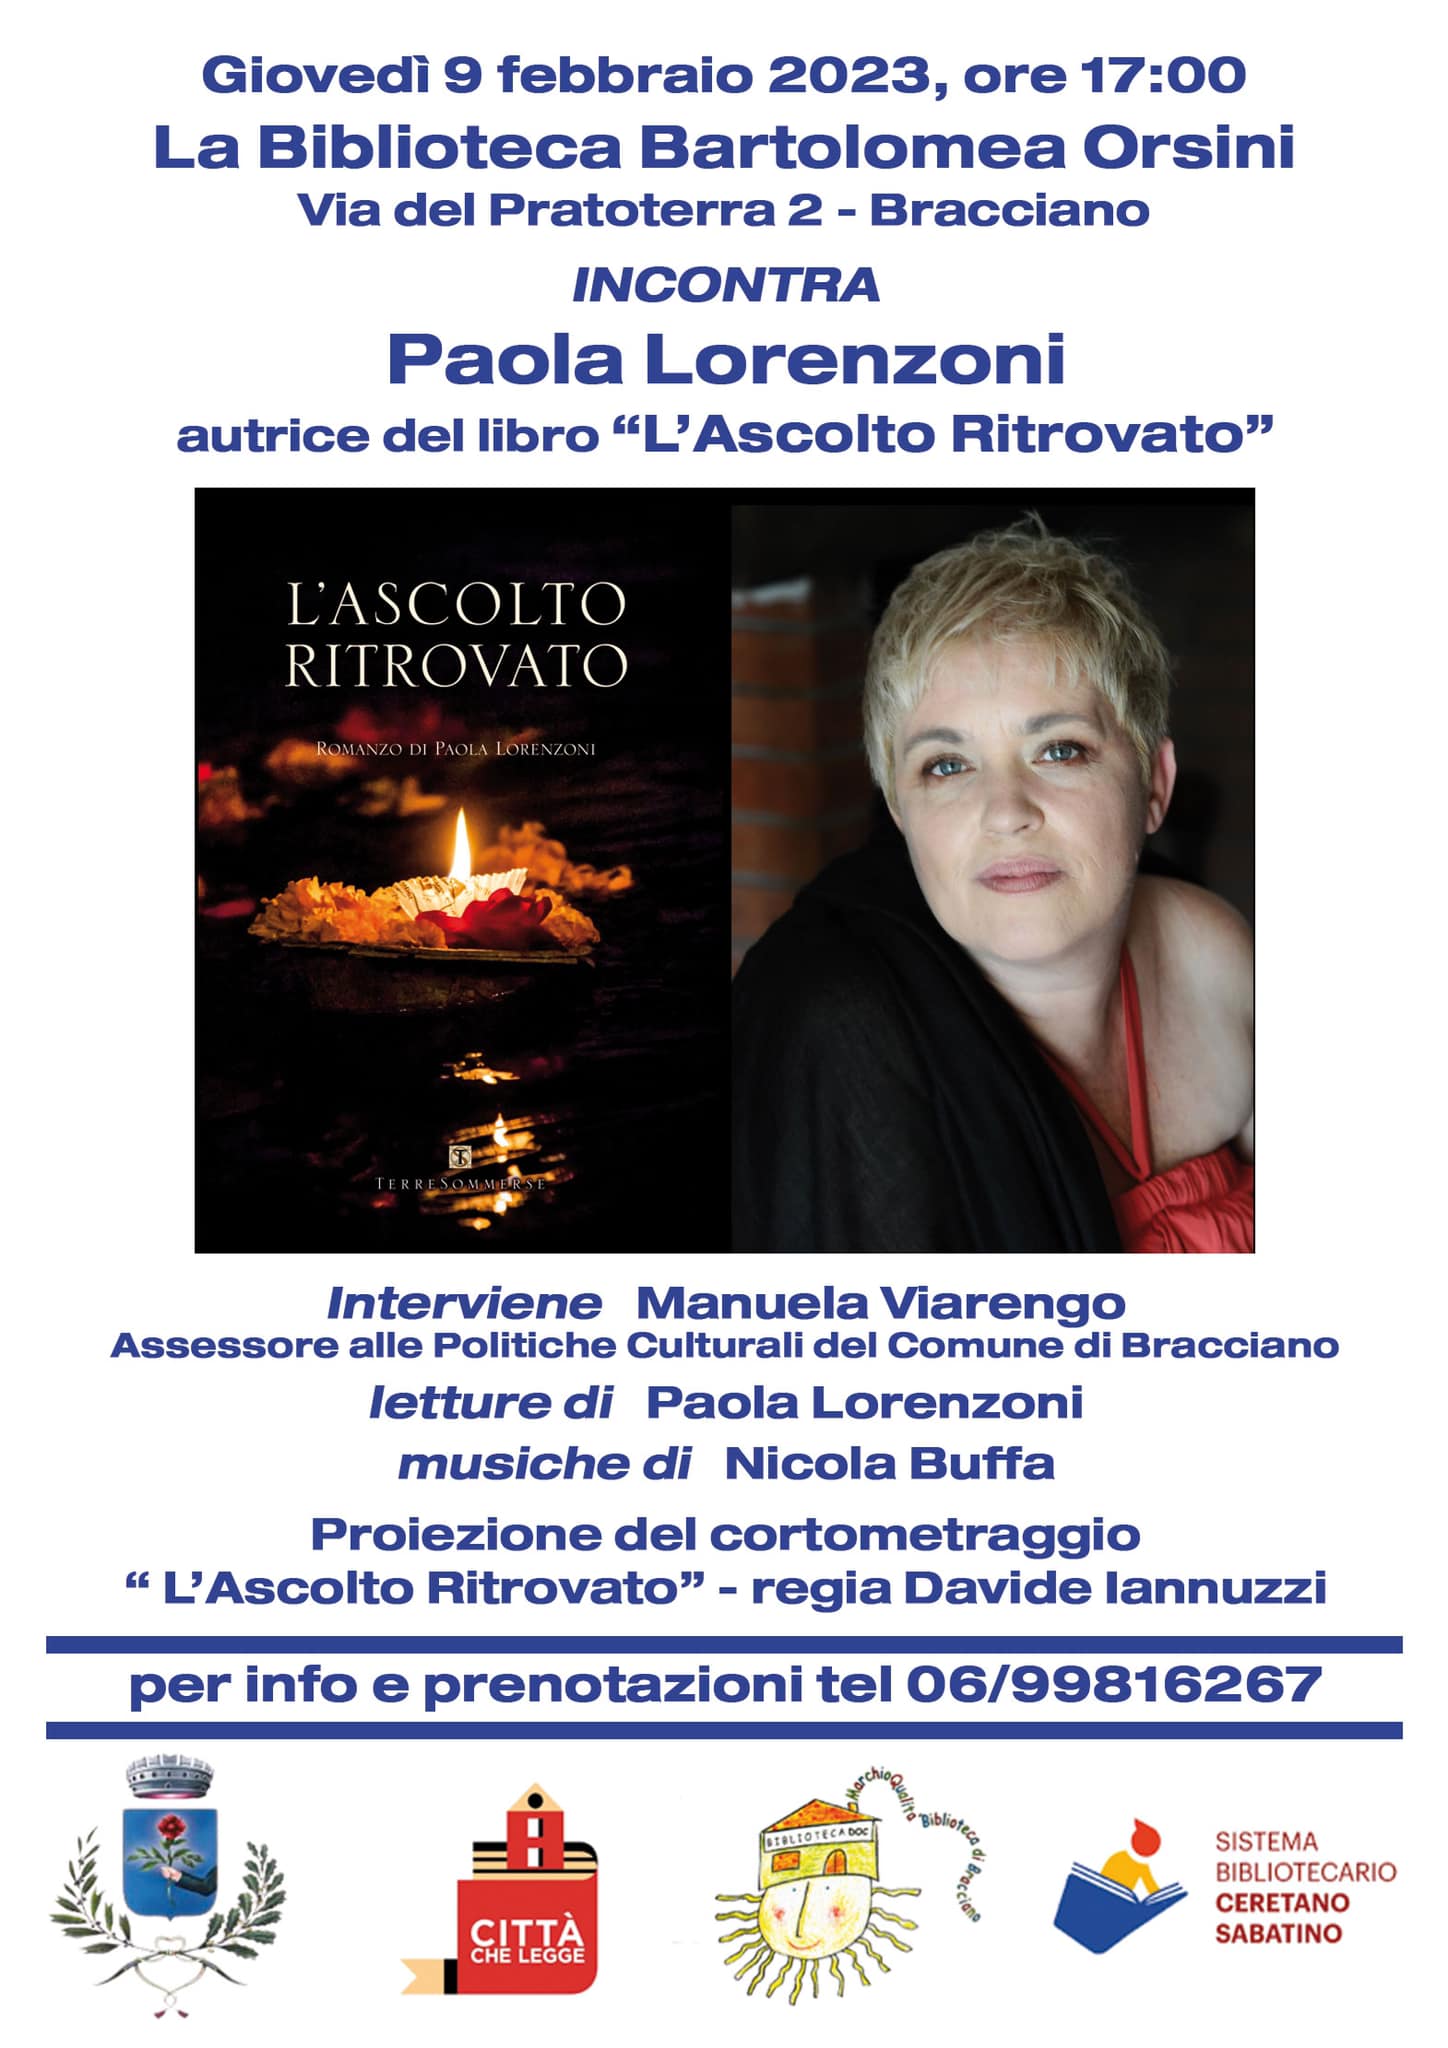 La Biblioteca Bartolomea Orsini incontra Paola Lorenzoni